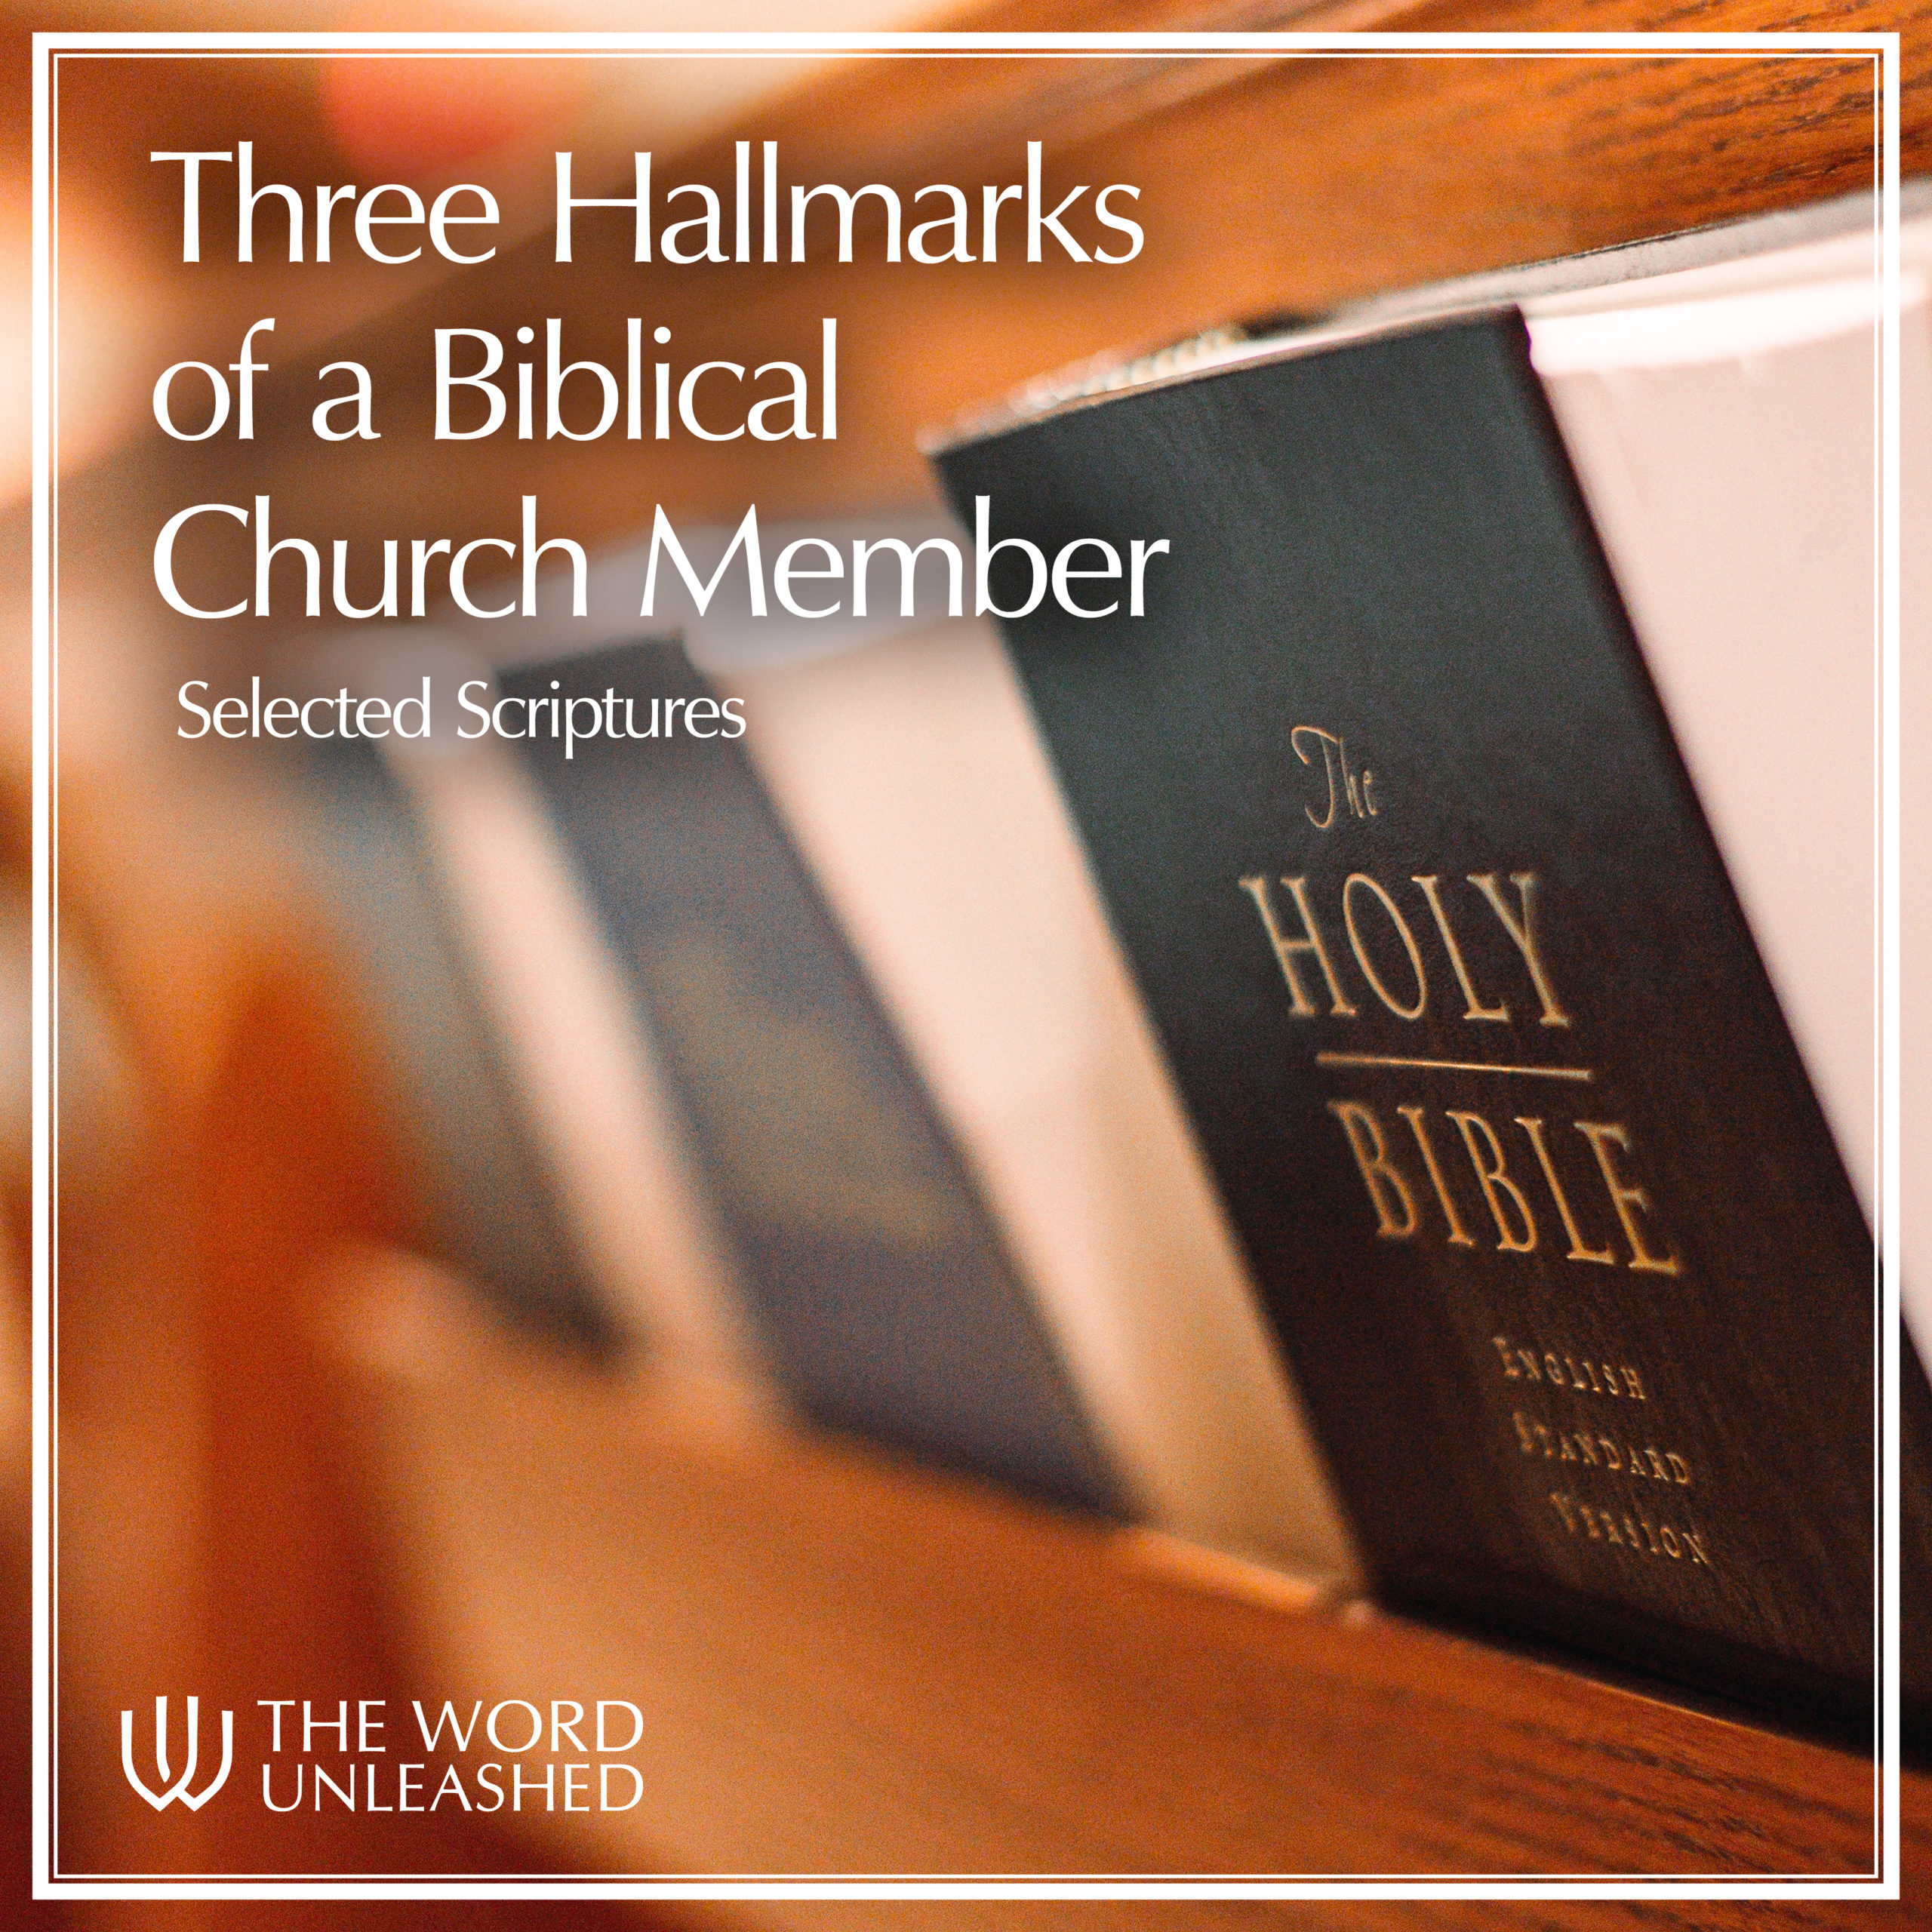 Three Hallmarks of a Biblical Church Member